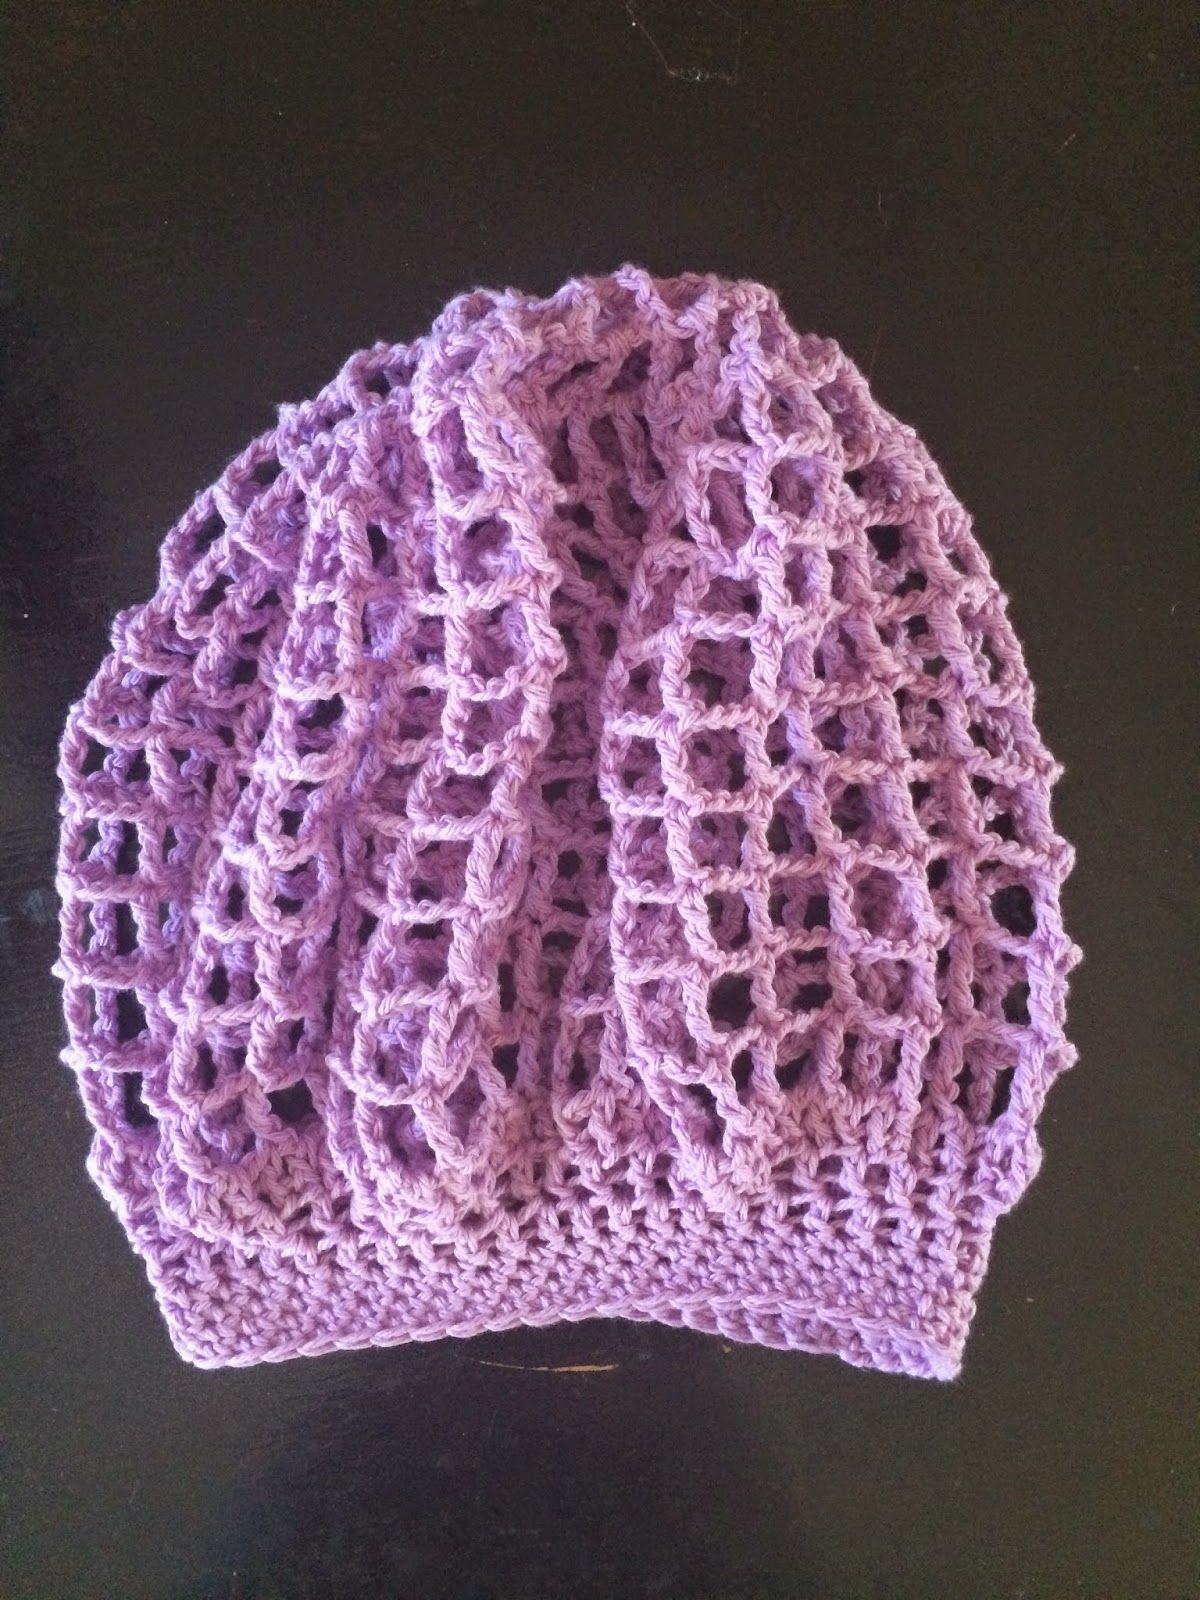 Snood Crochet Pattern Pin T Owens On Cro Hats Pinterest Crochet Crochet Hats And